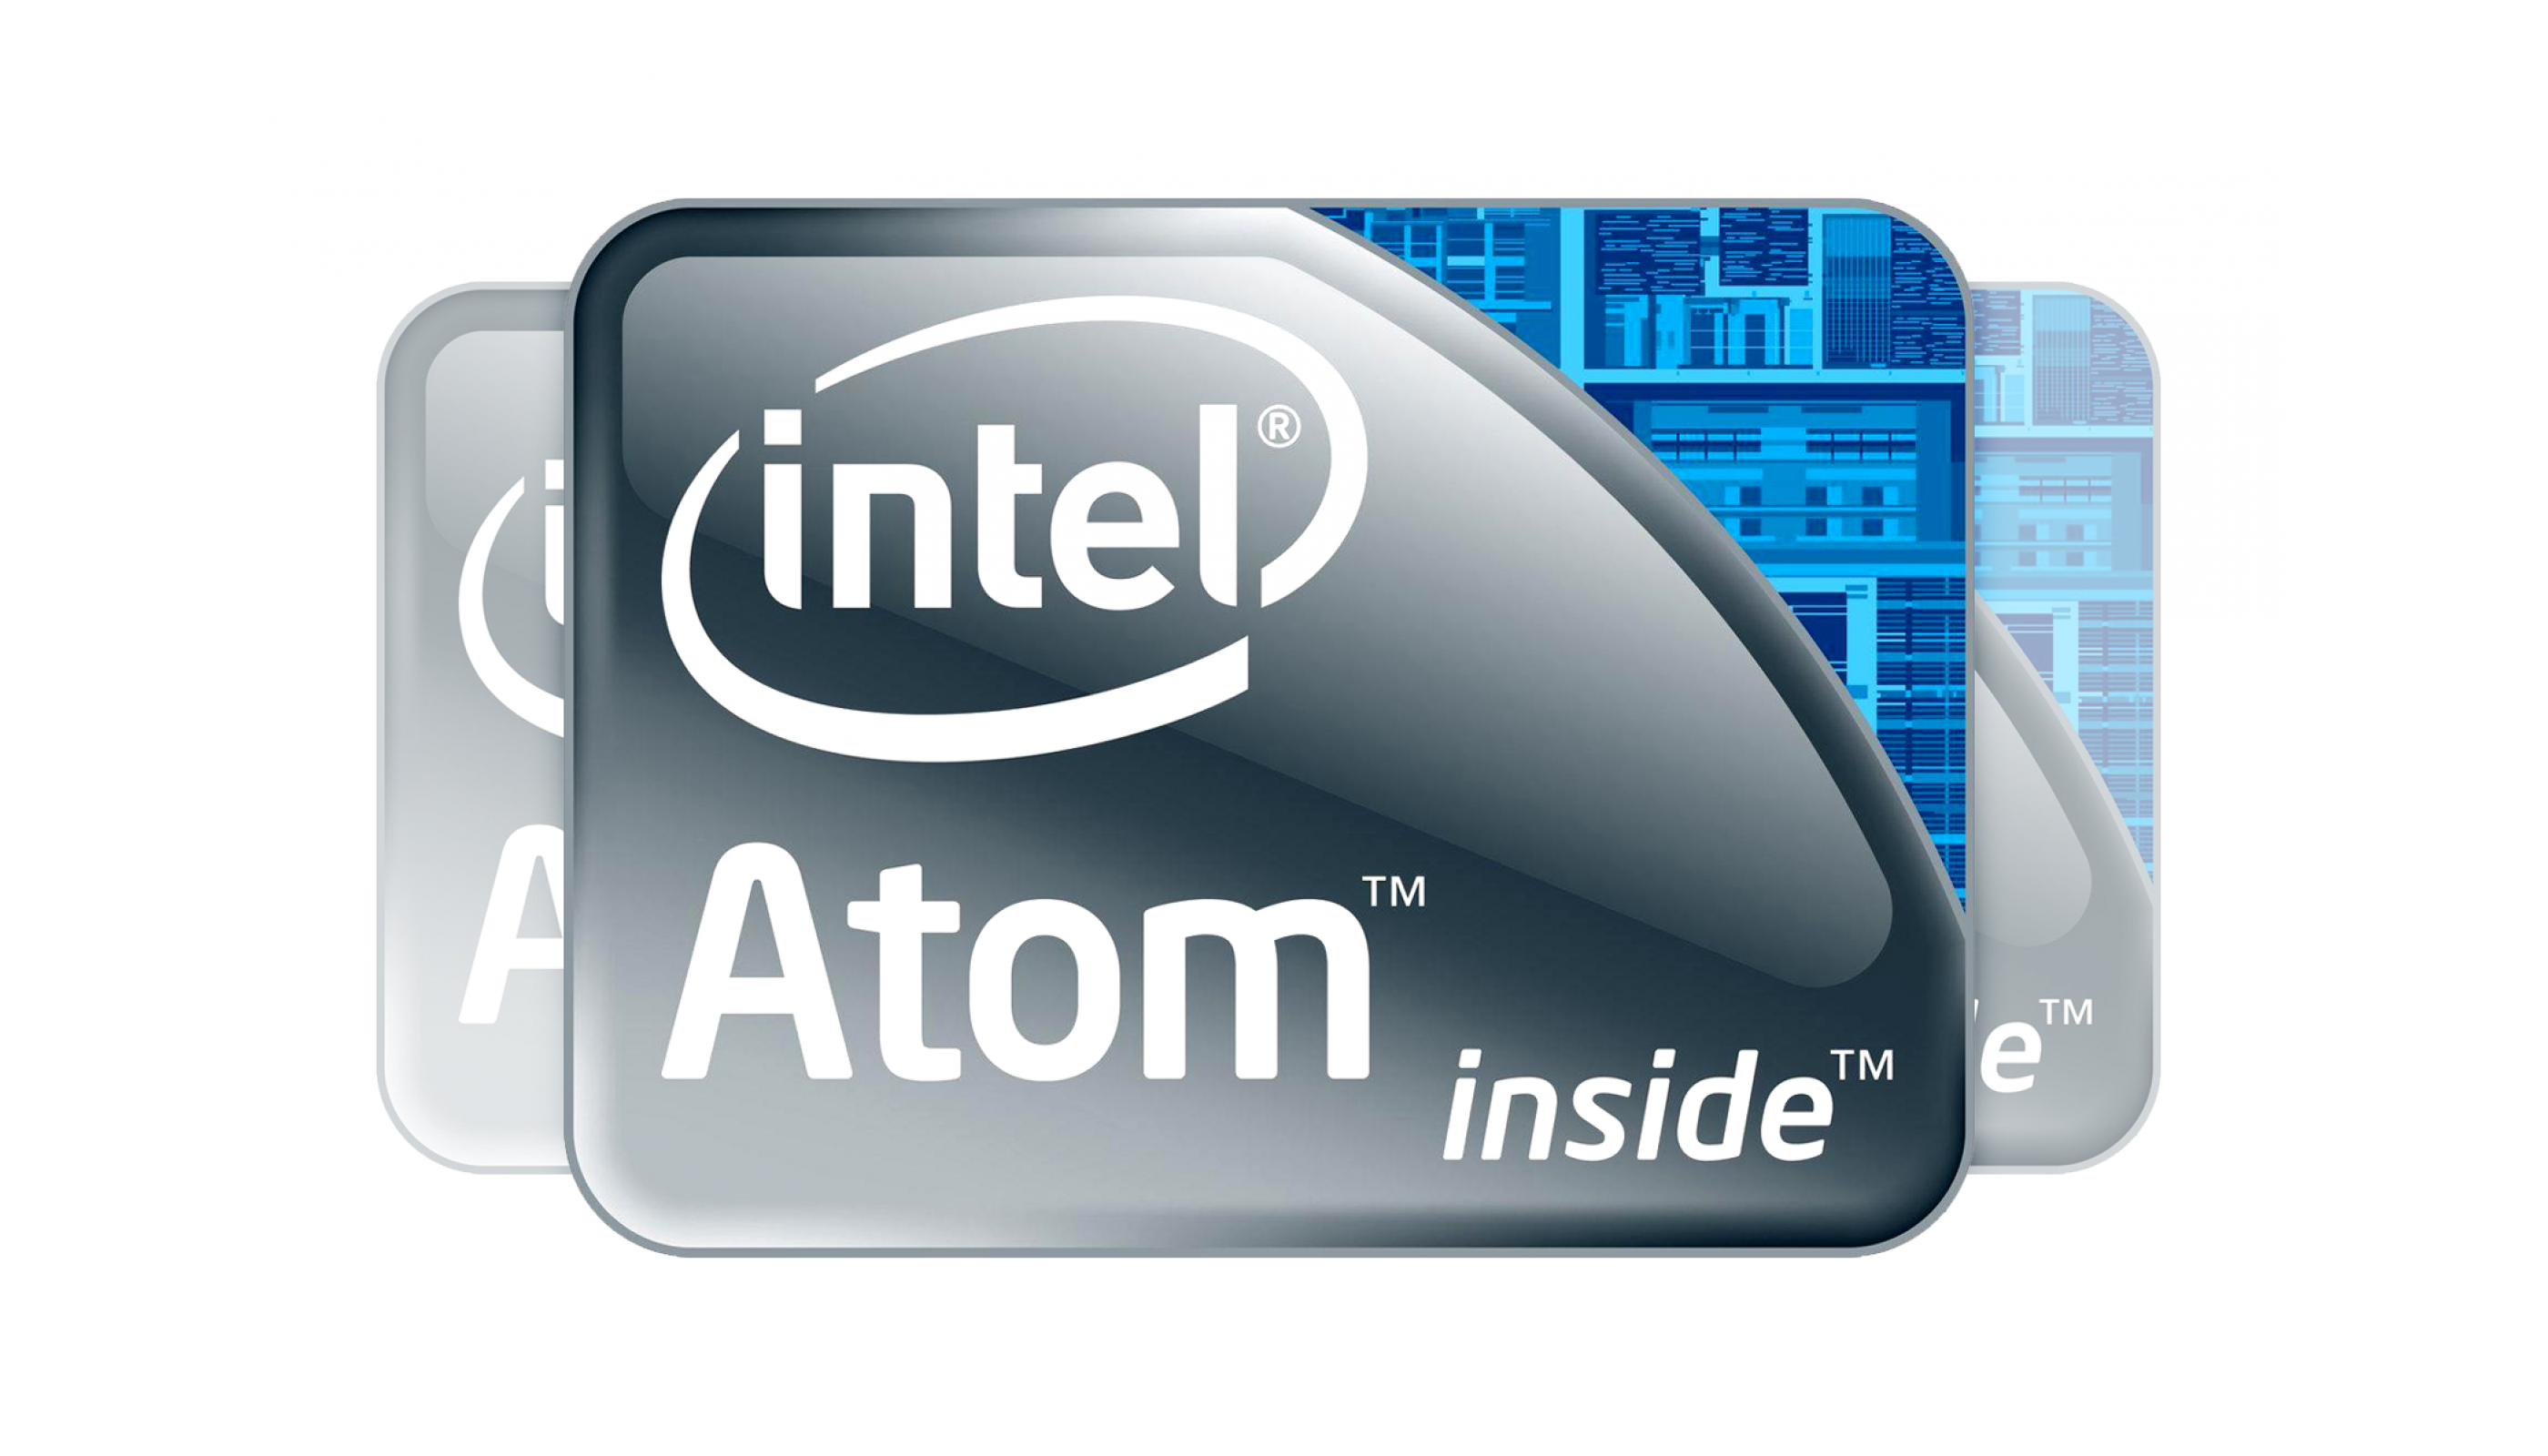 Intel start. Интел атом. Intel Atom inside. Сб Intel старт. Intel Atom z2520.